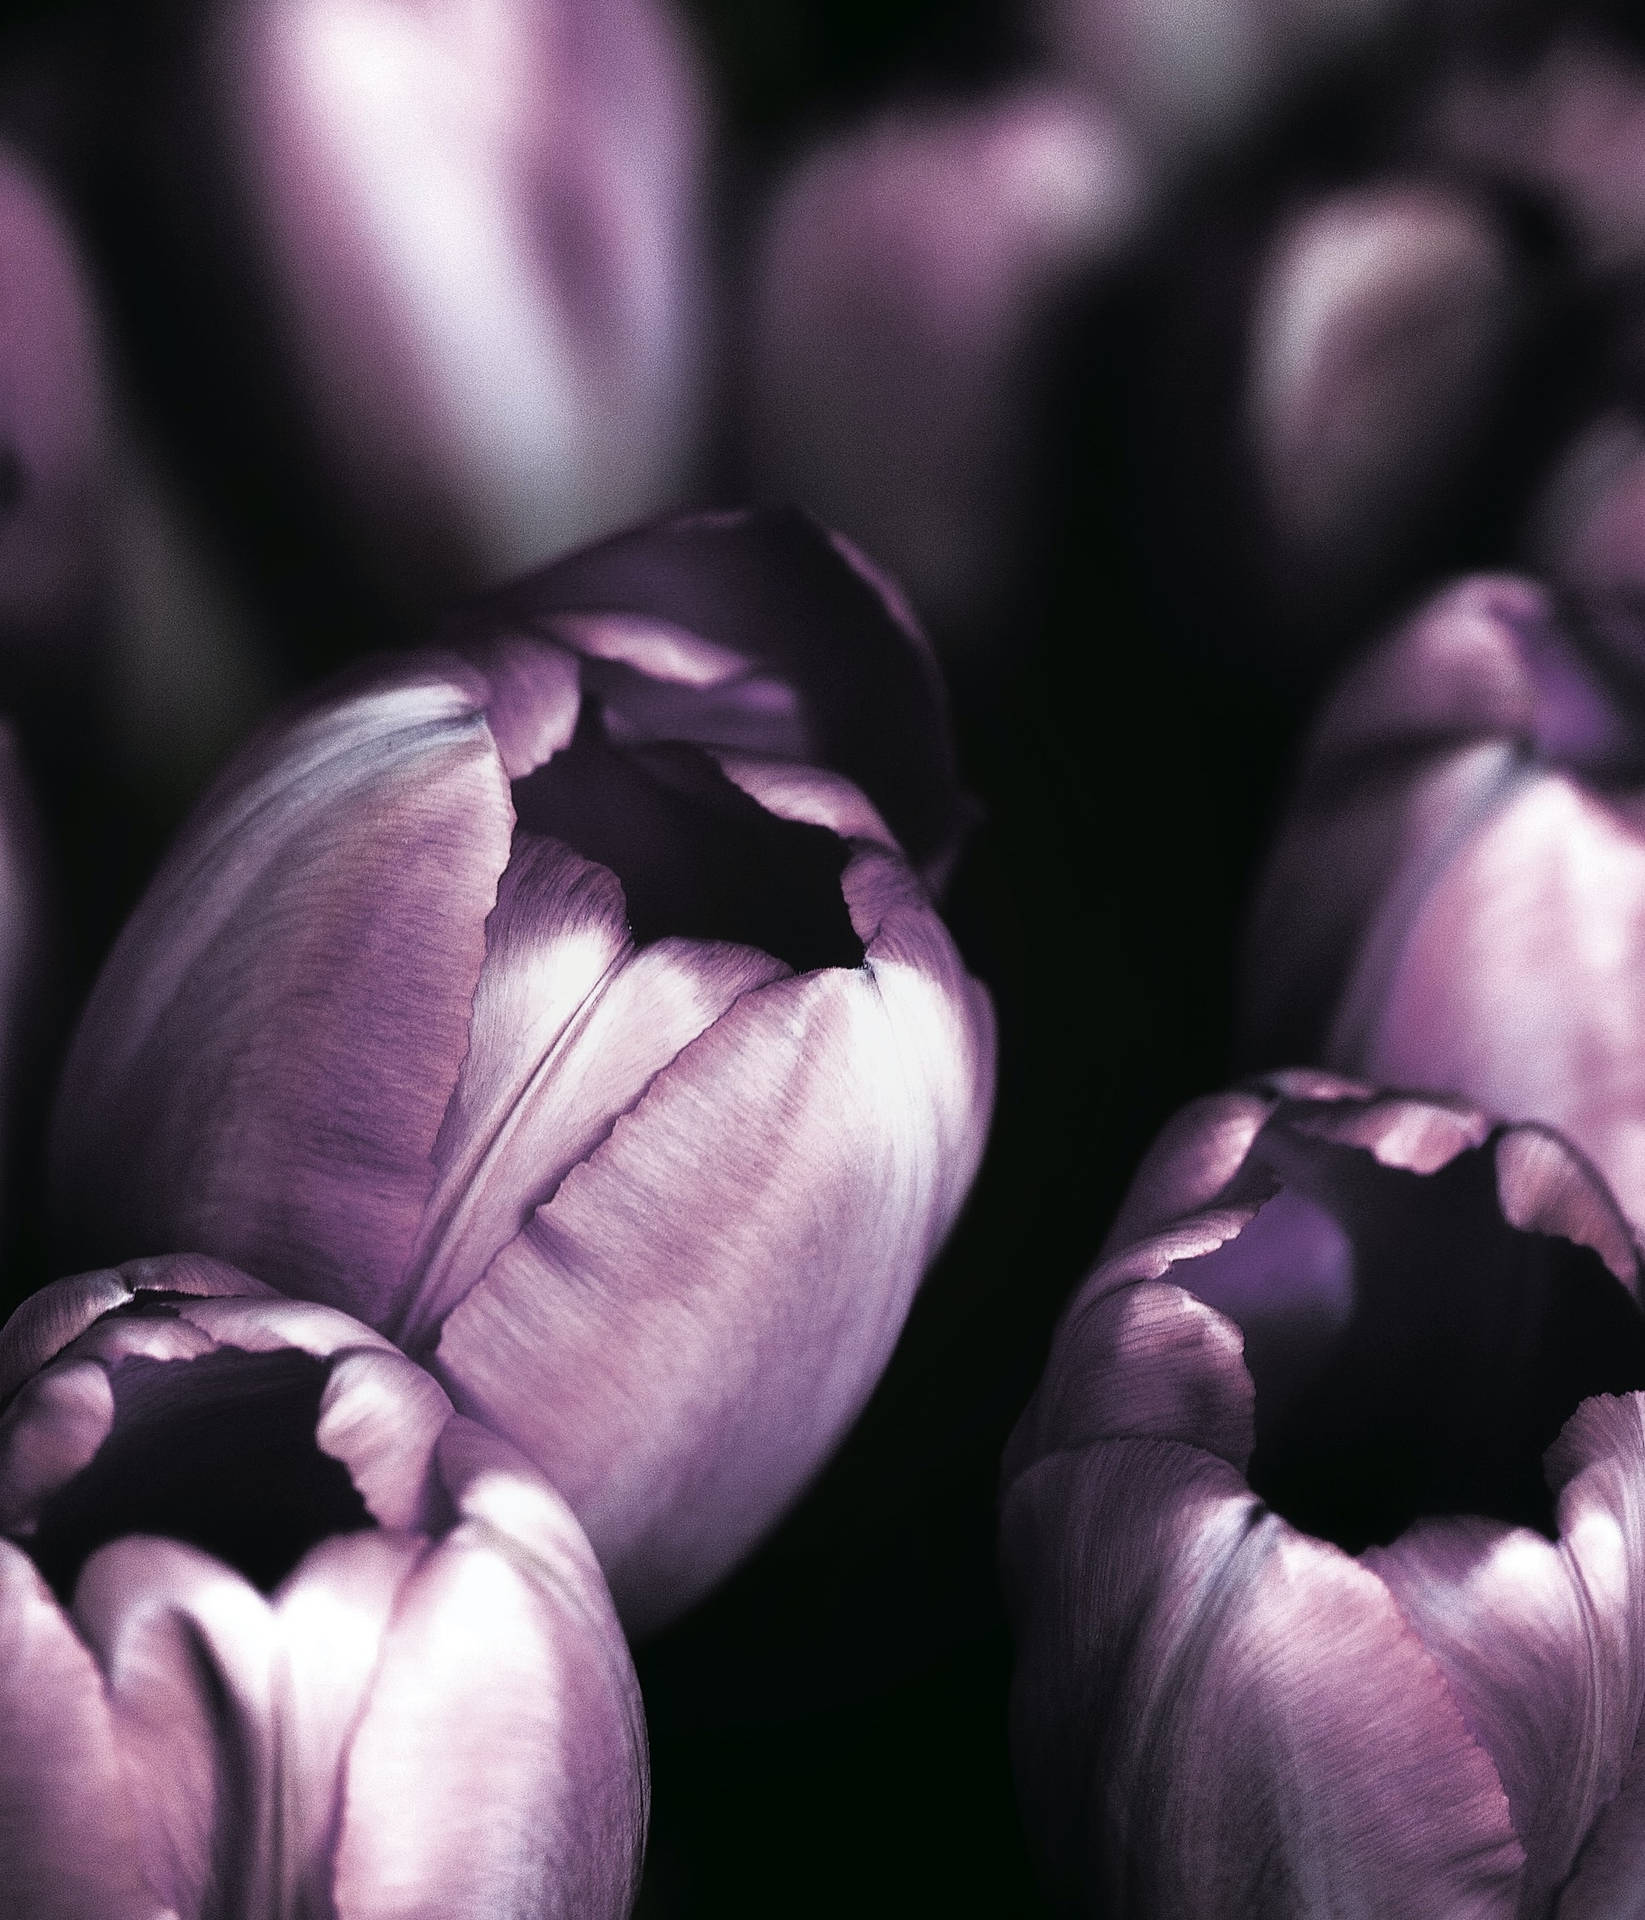 dark purple tulips wallpaper